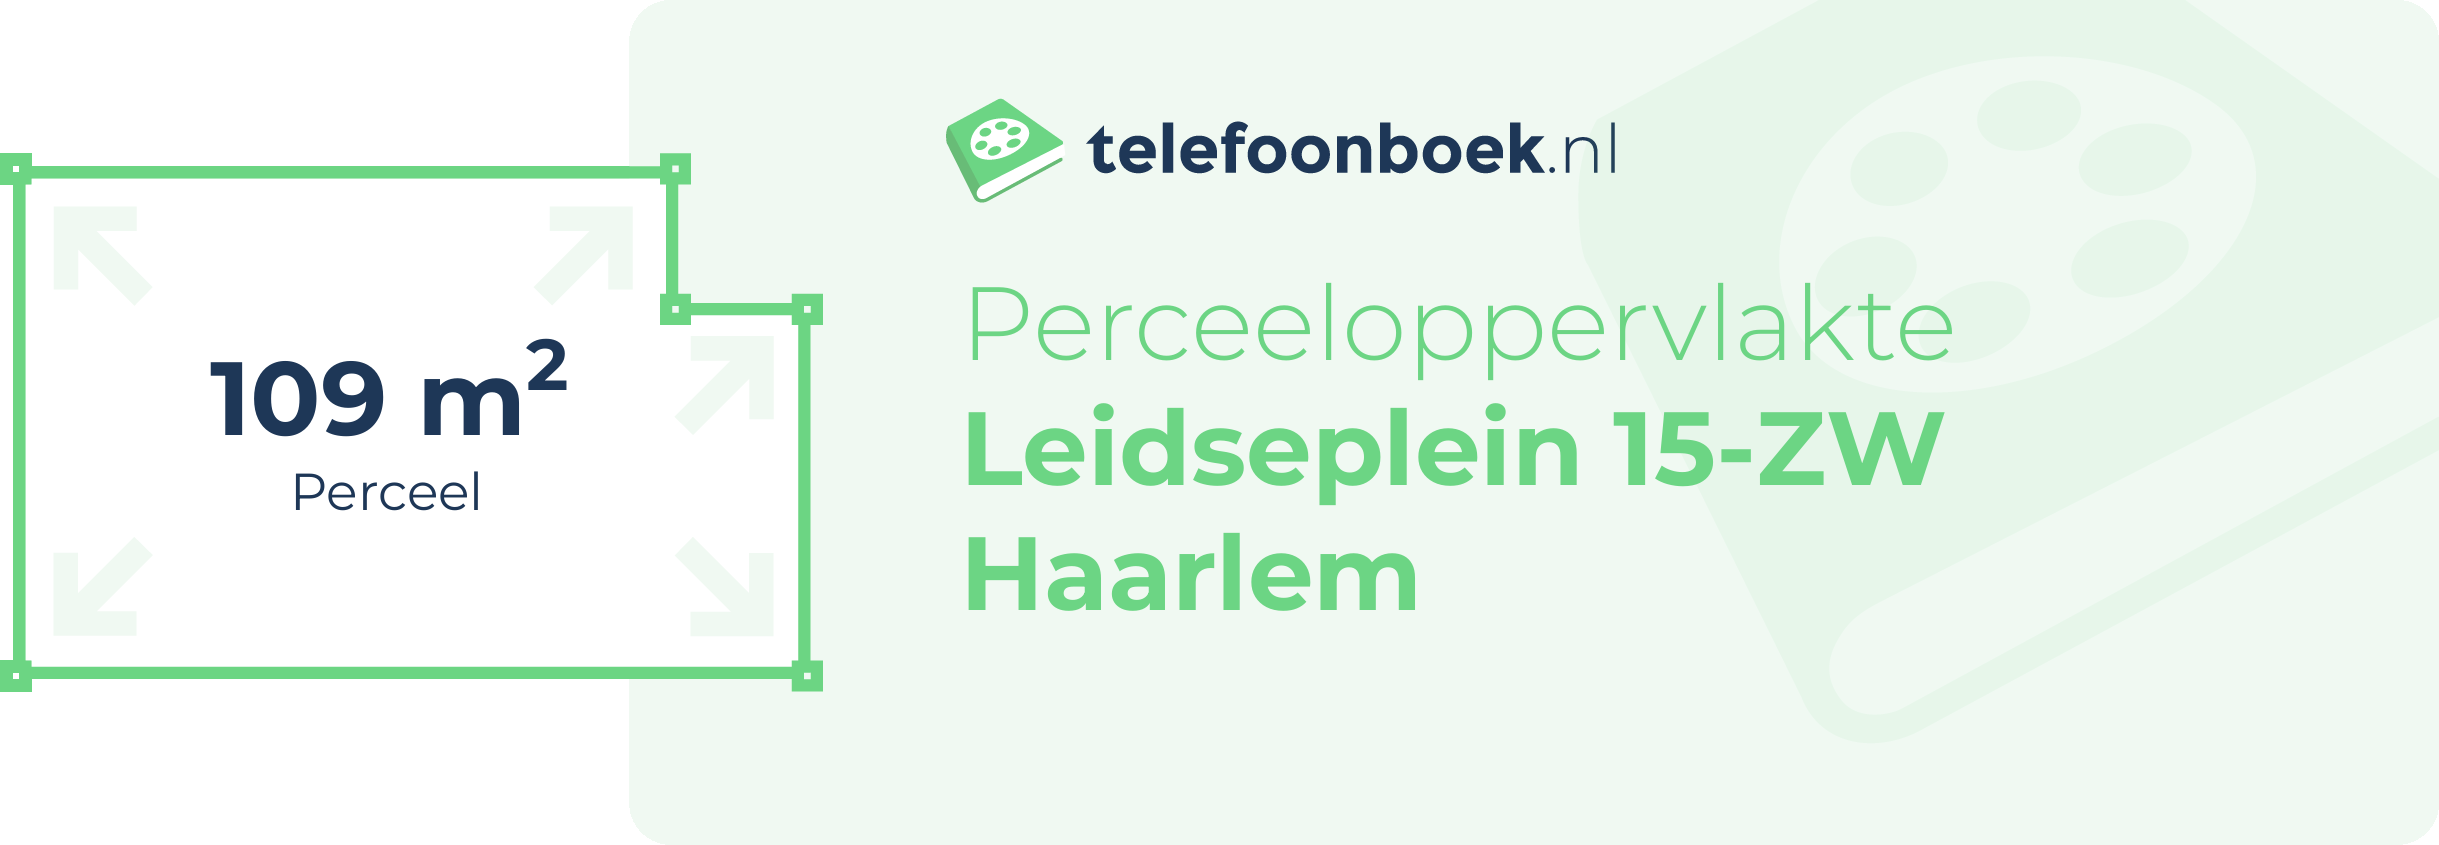 Perceeloppervlakte Leidseplein 15-ZW Haarlem